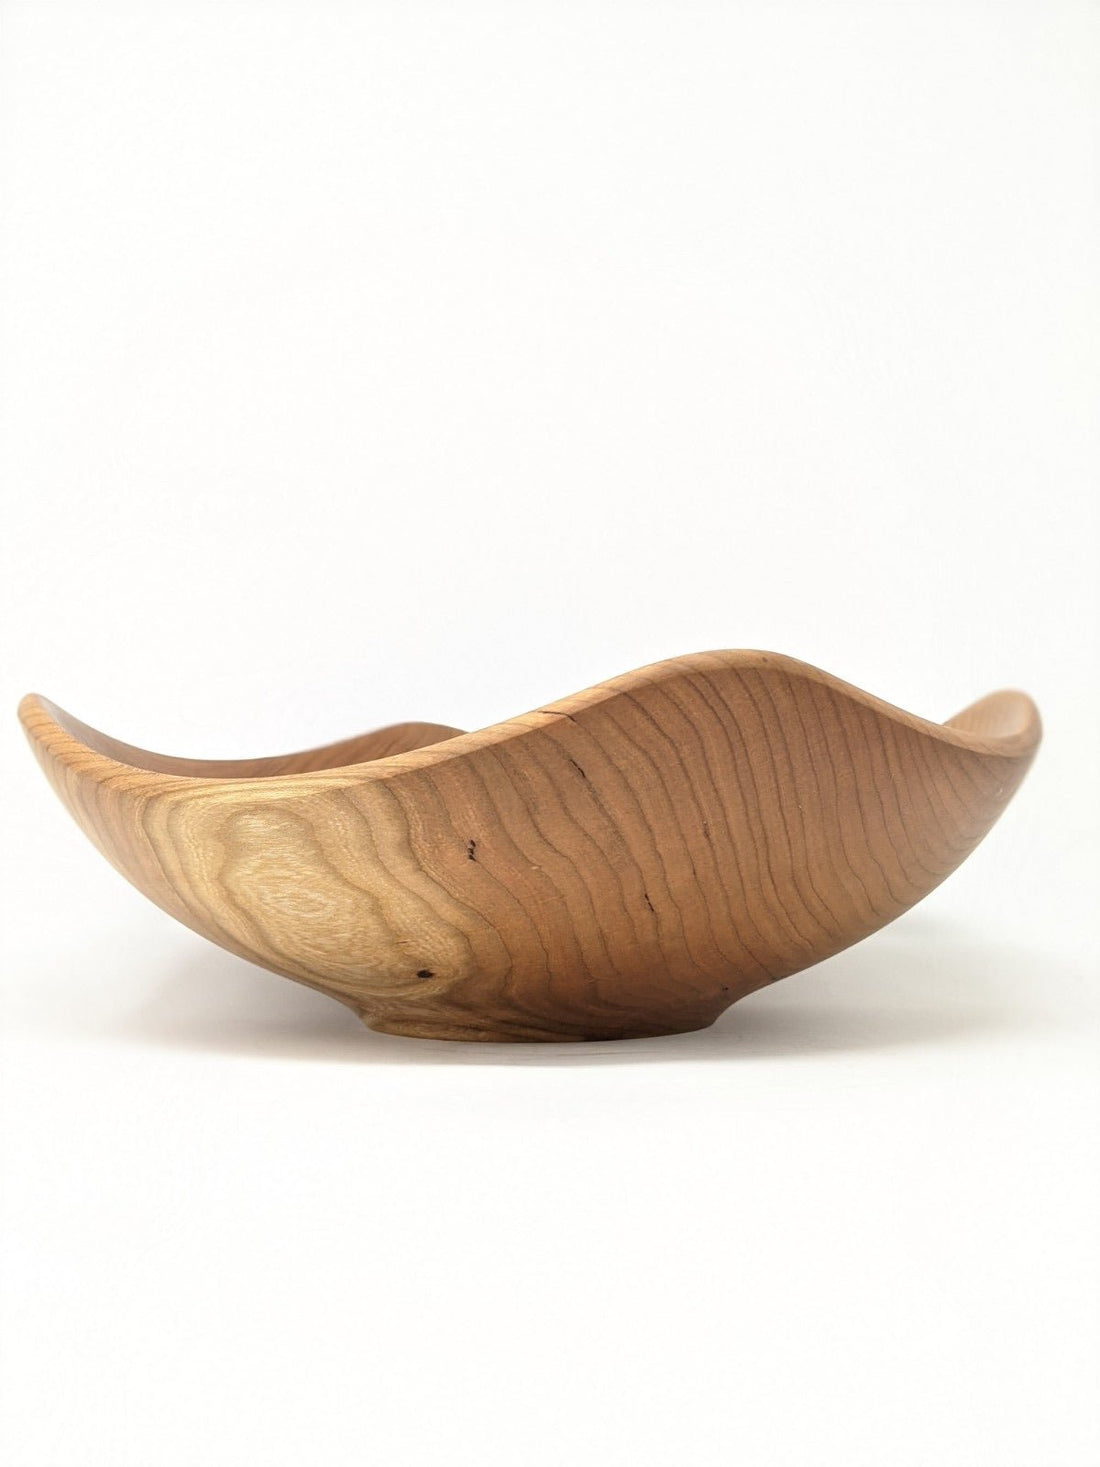  Echo (square) Wood Bowls